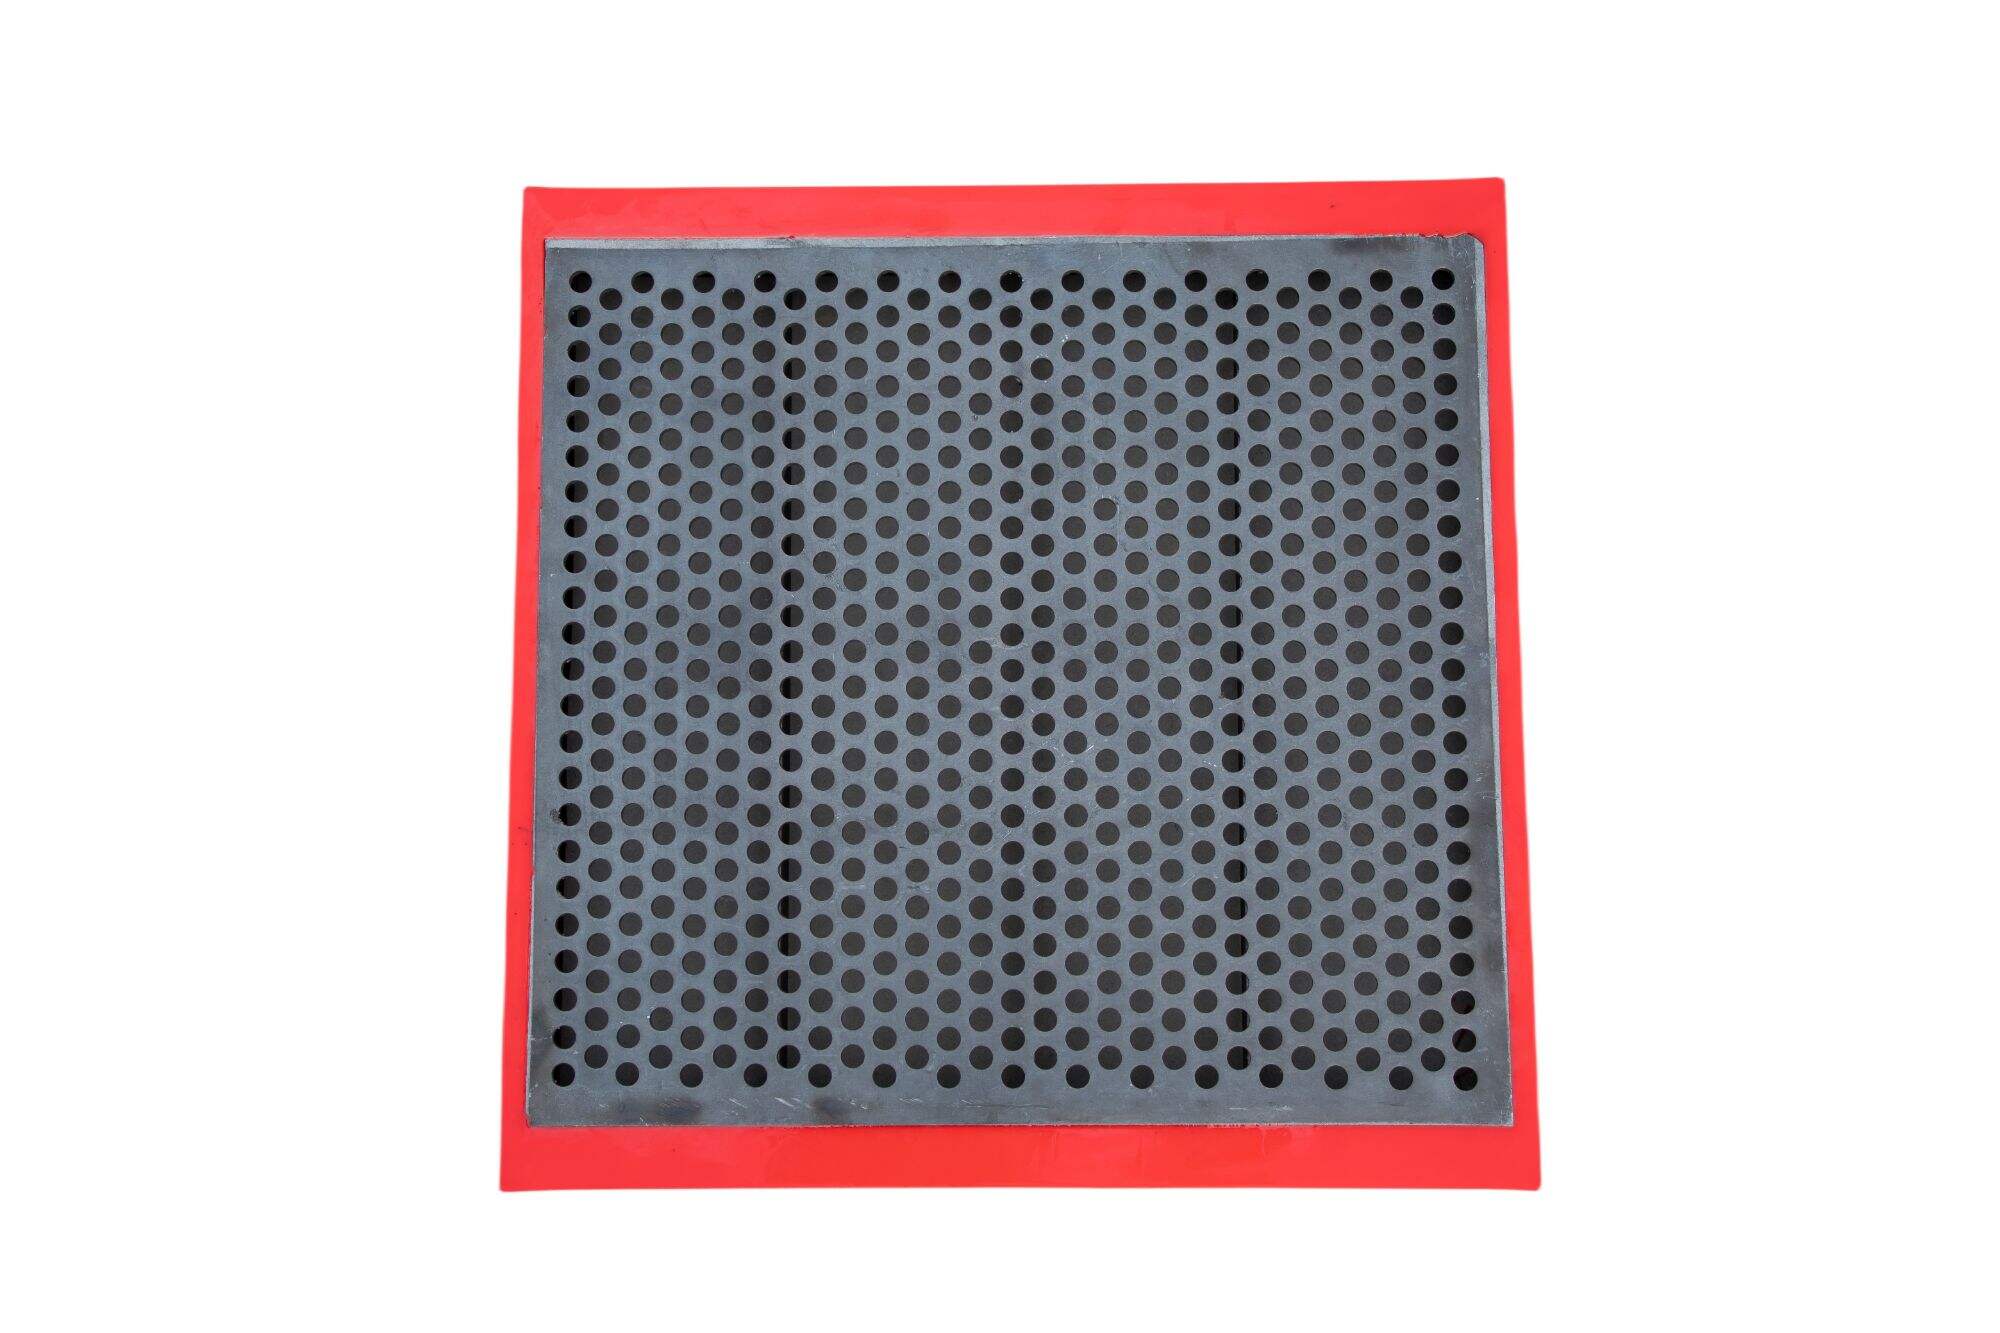 Polyurethane edged perforated sieve plate